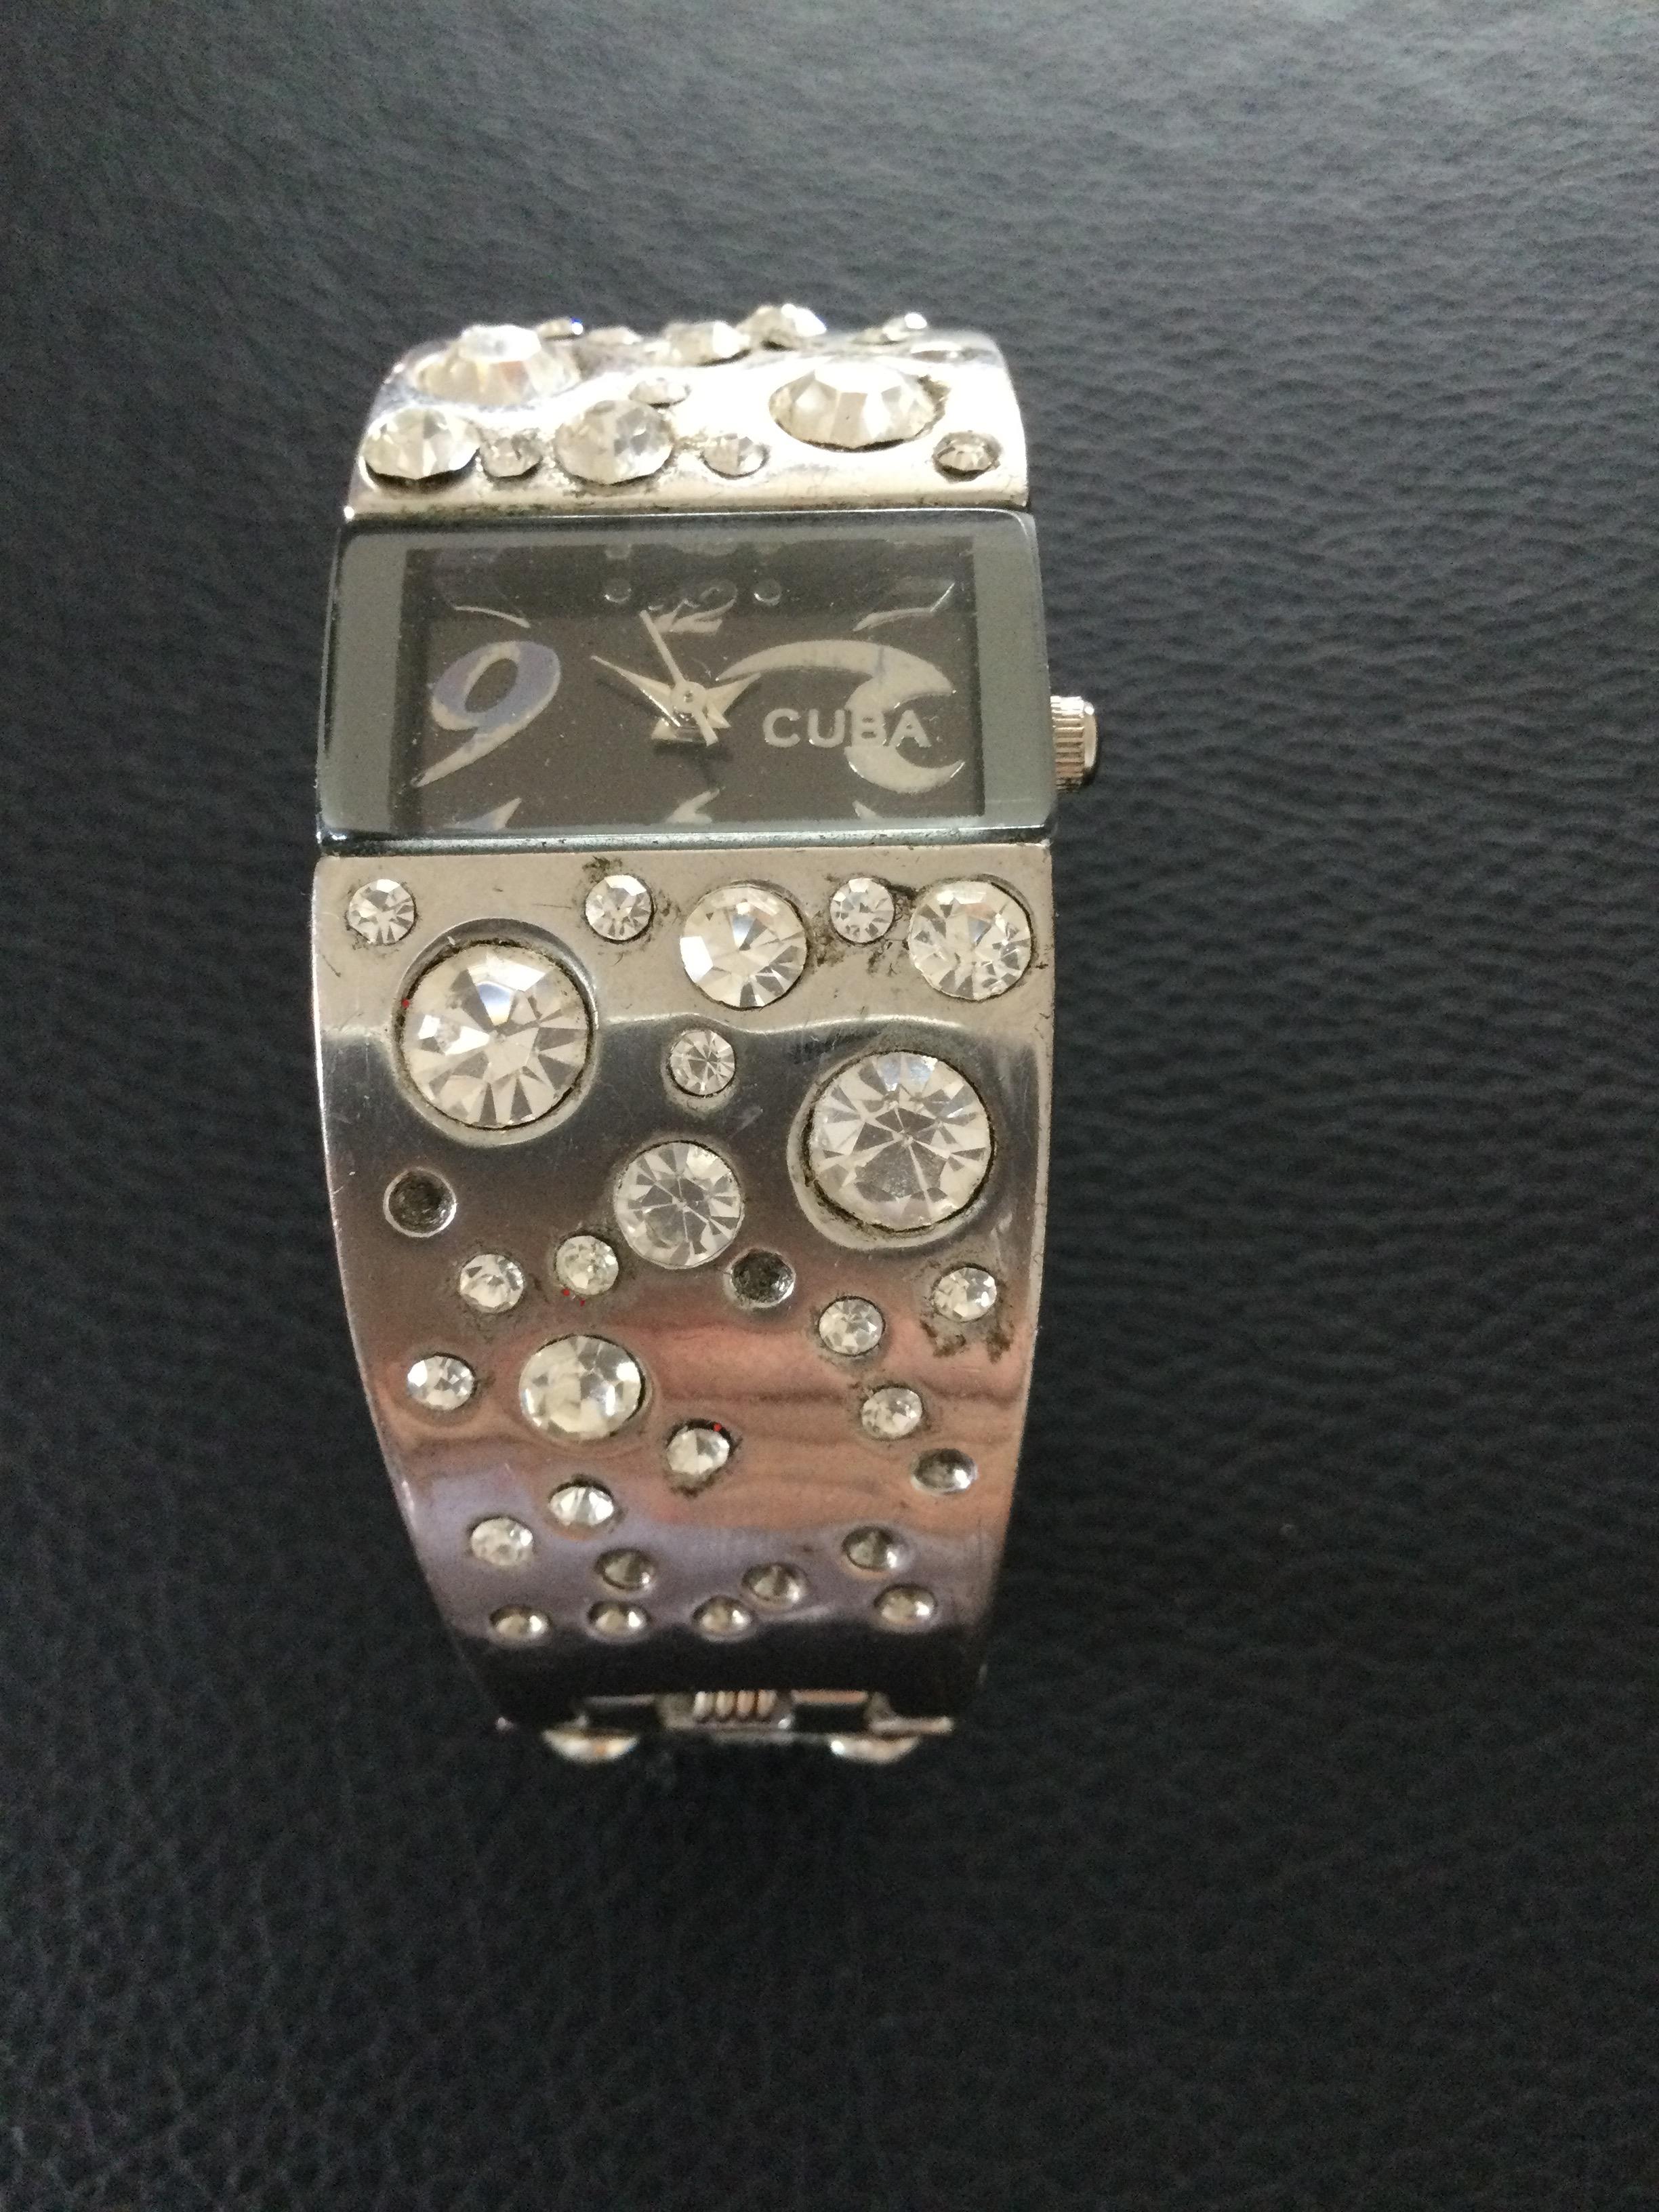 Cuba Ladies Diamante Wristwatch with Sprung Adjusted Bracelet (GS 123) - Image 2 of 5